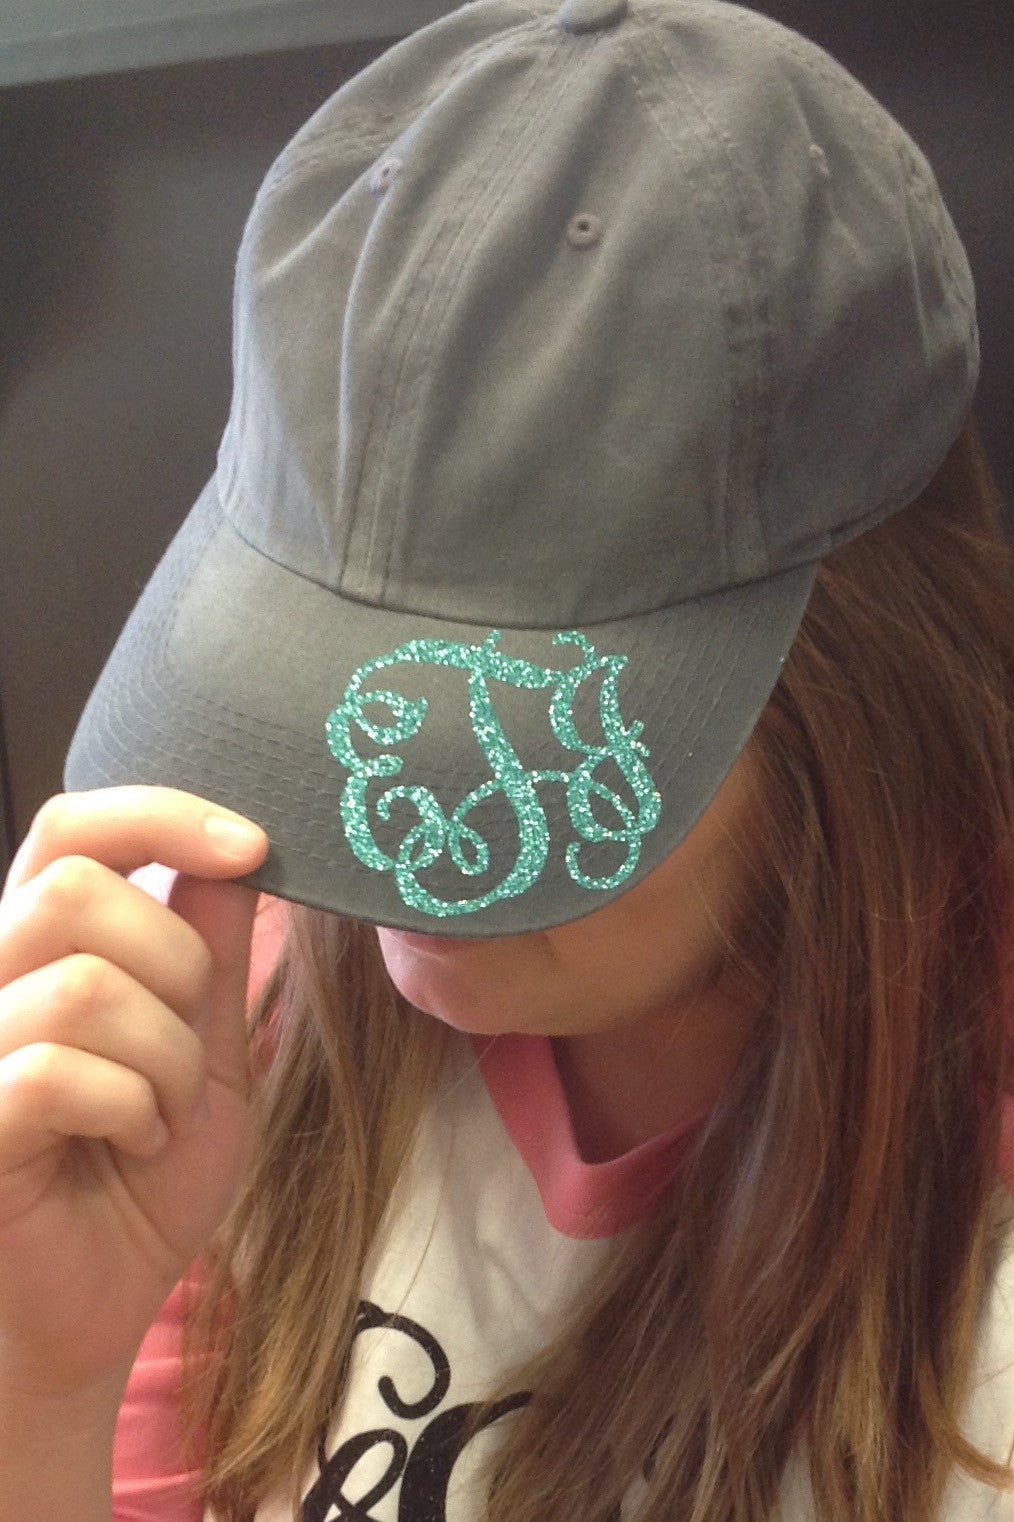 Ball cap with glitter monogram